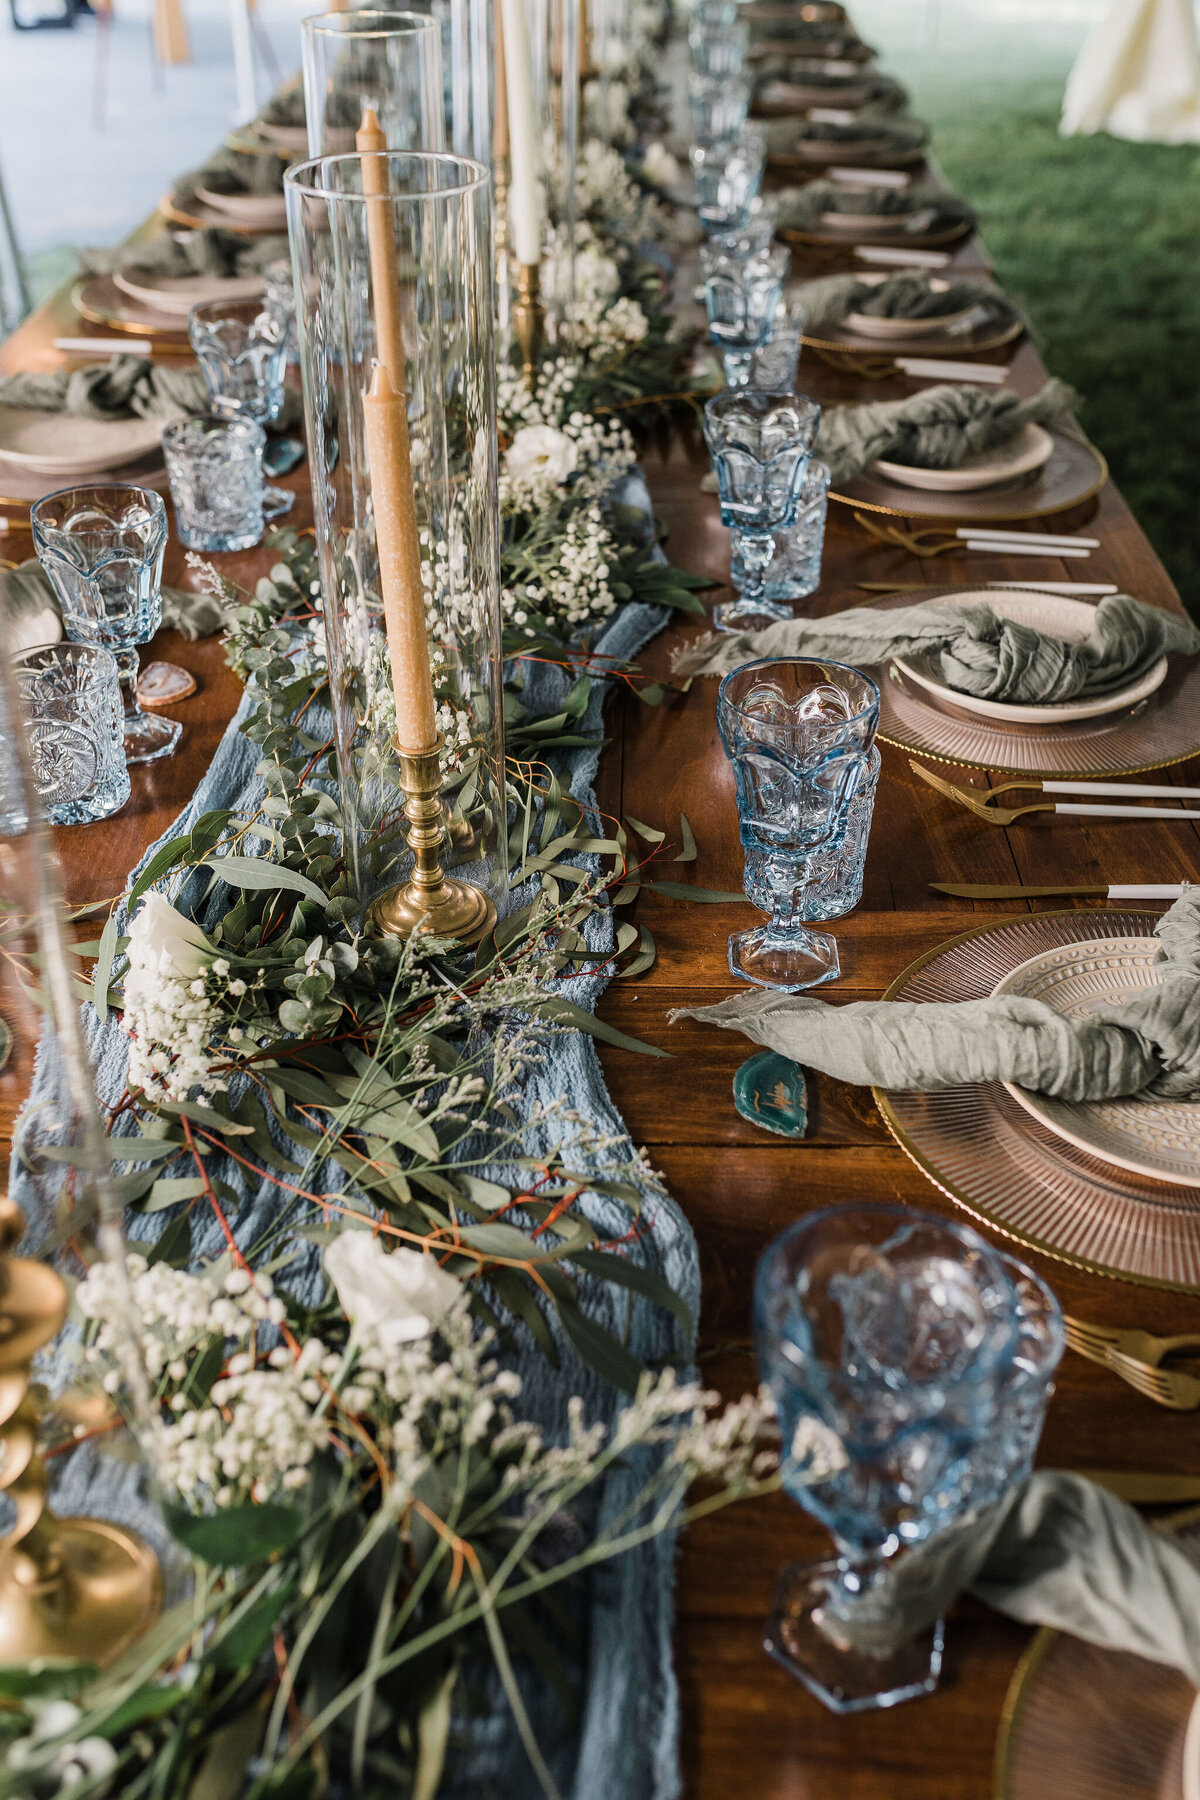 glastonbury-ct-wedding-flowers-tableware-rentals-petals-&-plates-tented-reception-11